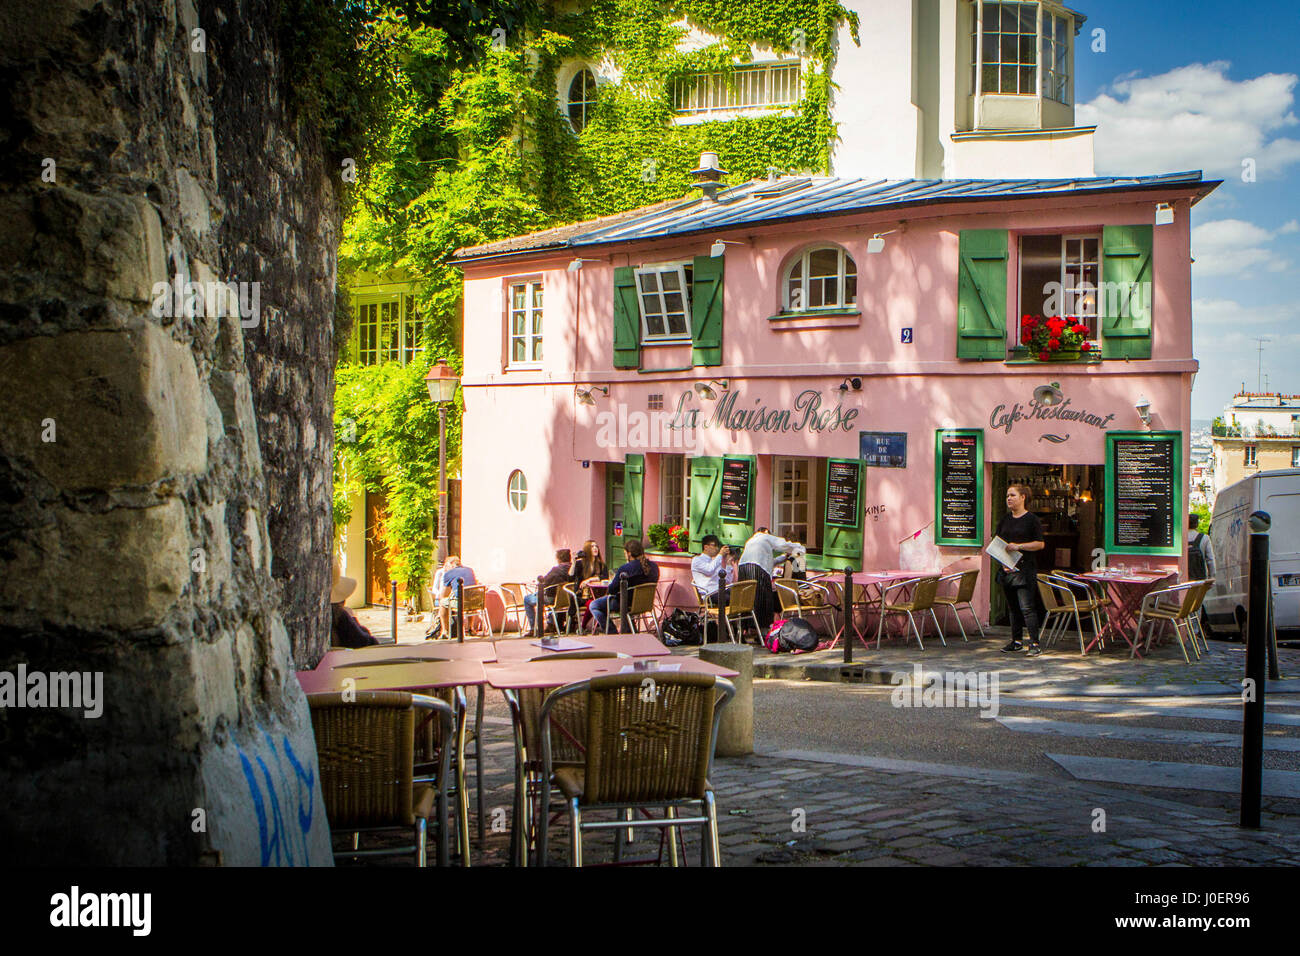 La Maison Rose Cafe im Stadtteil Montmartre von Paris. Stockfoto